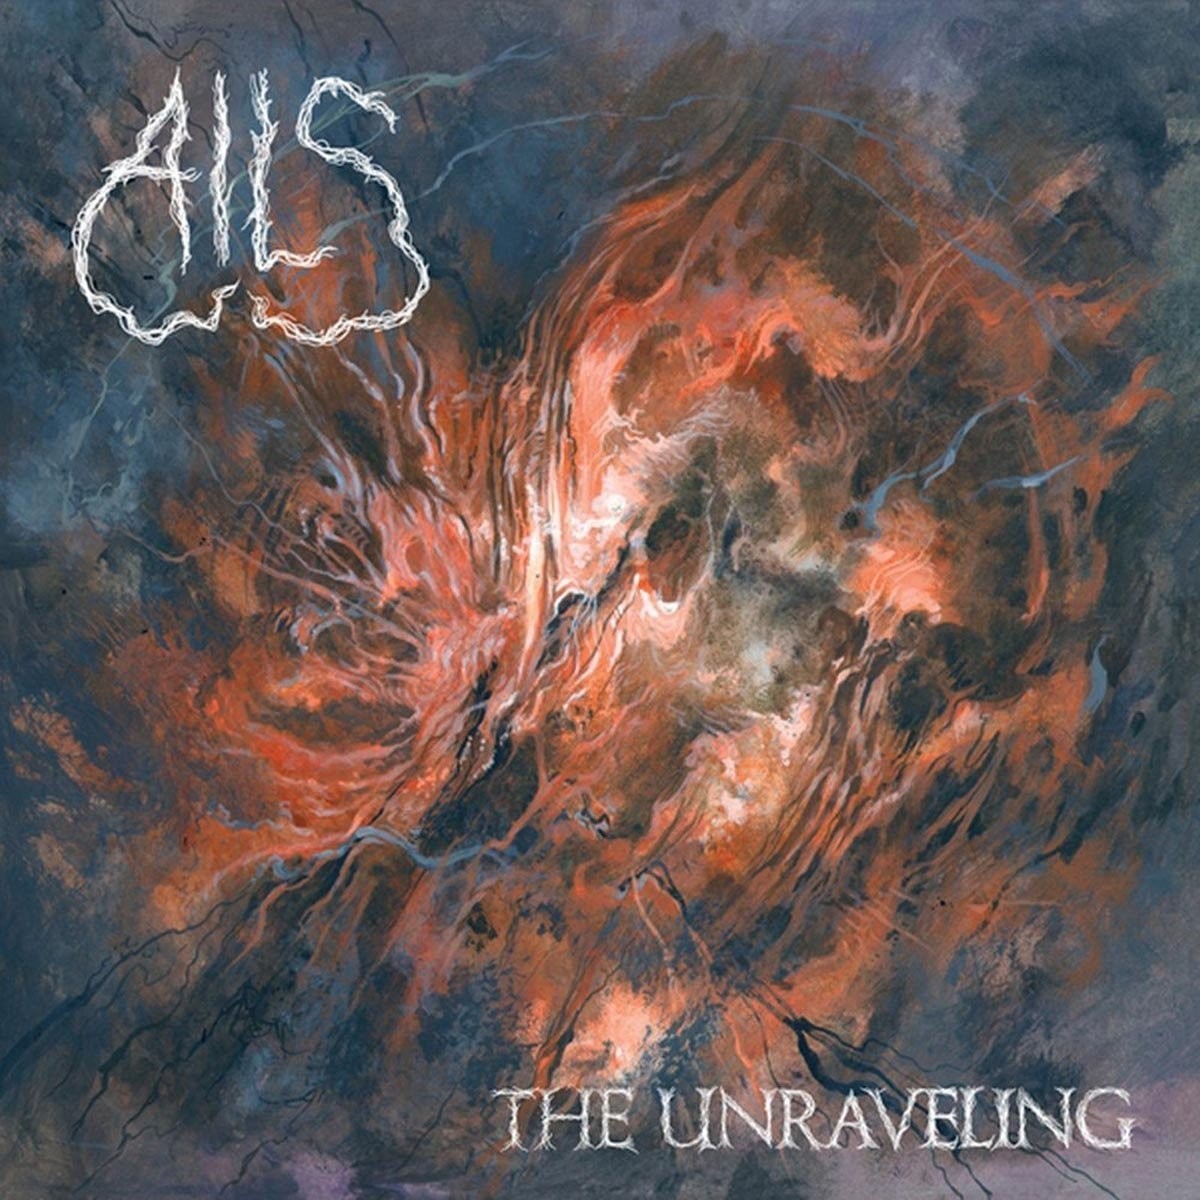 Ails - Unraveling